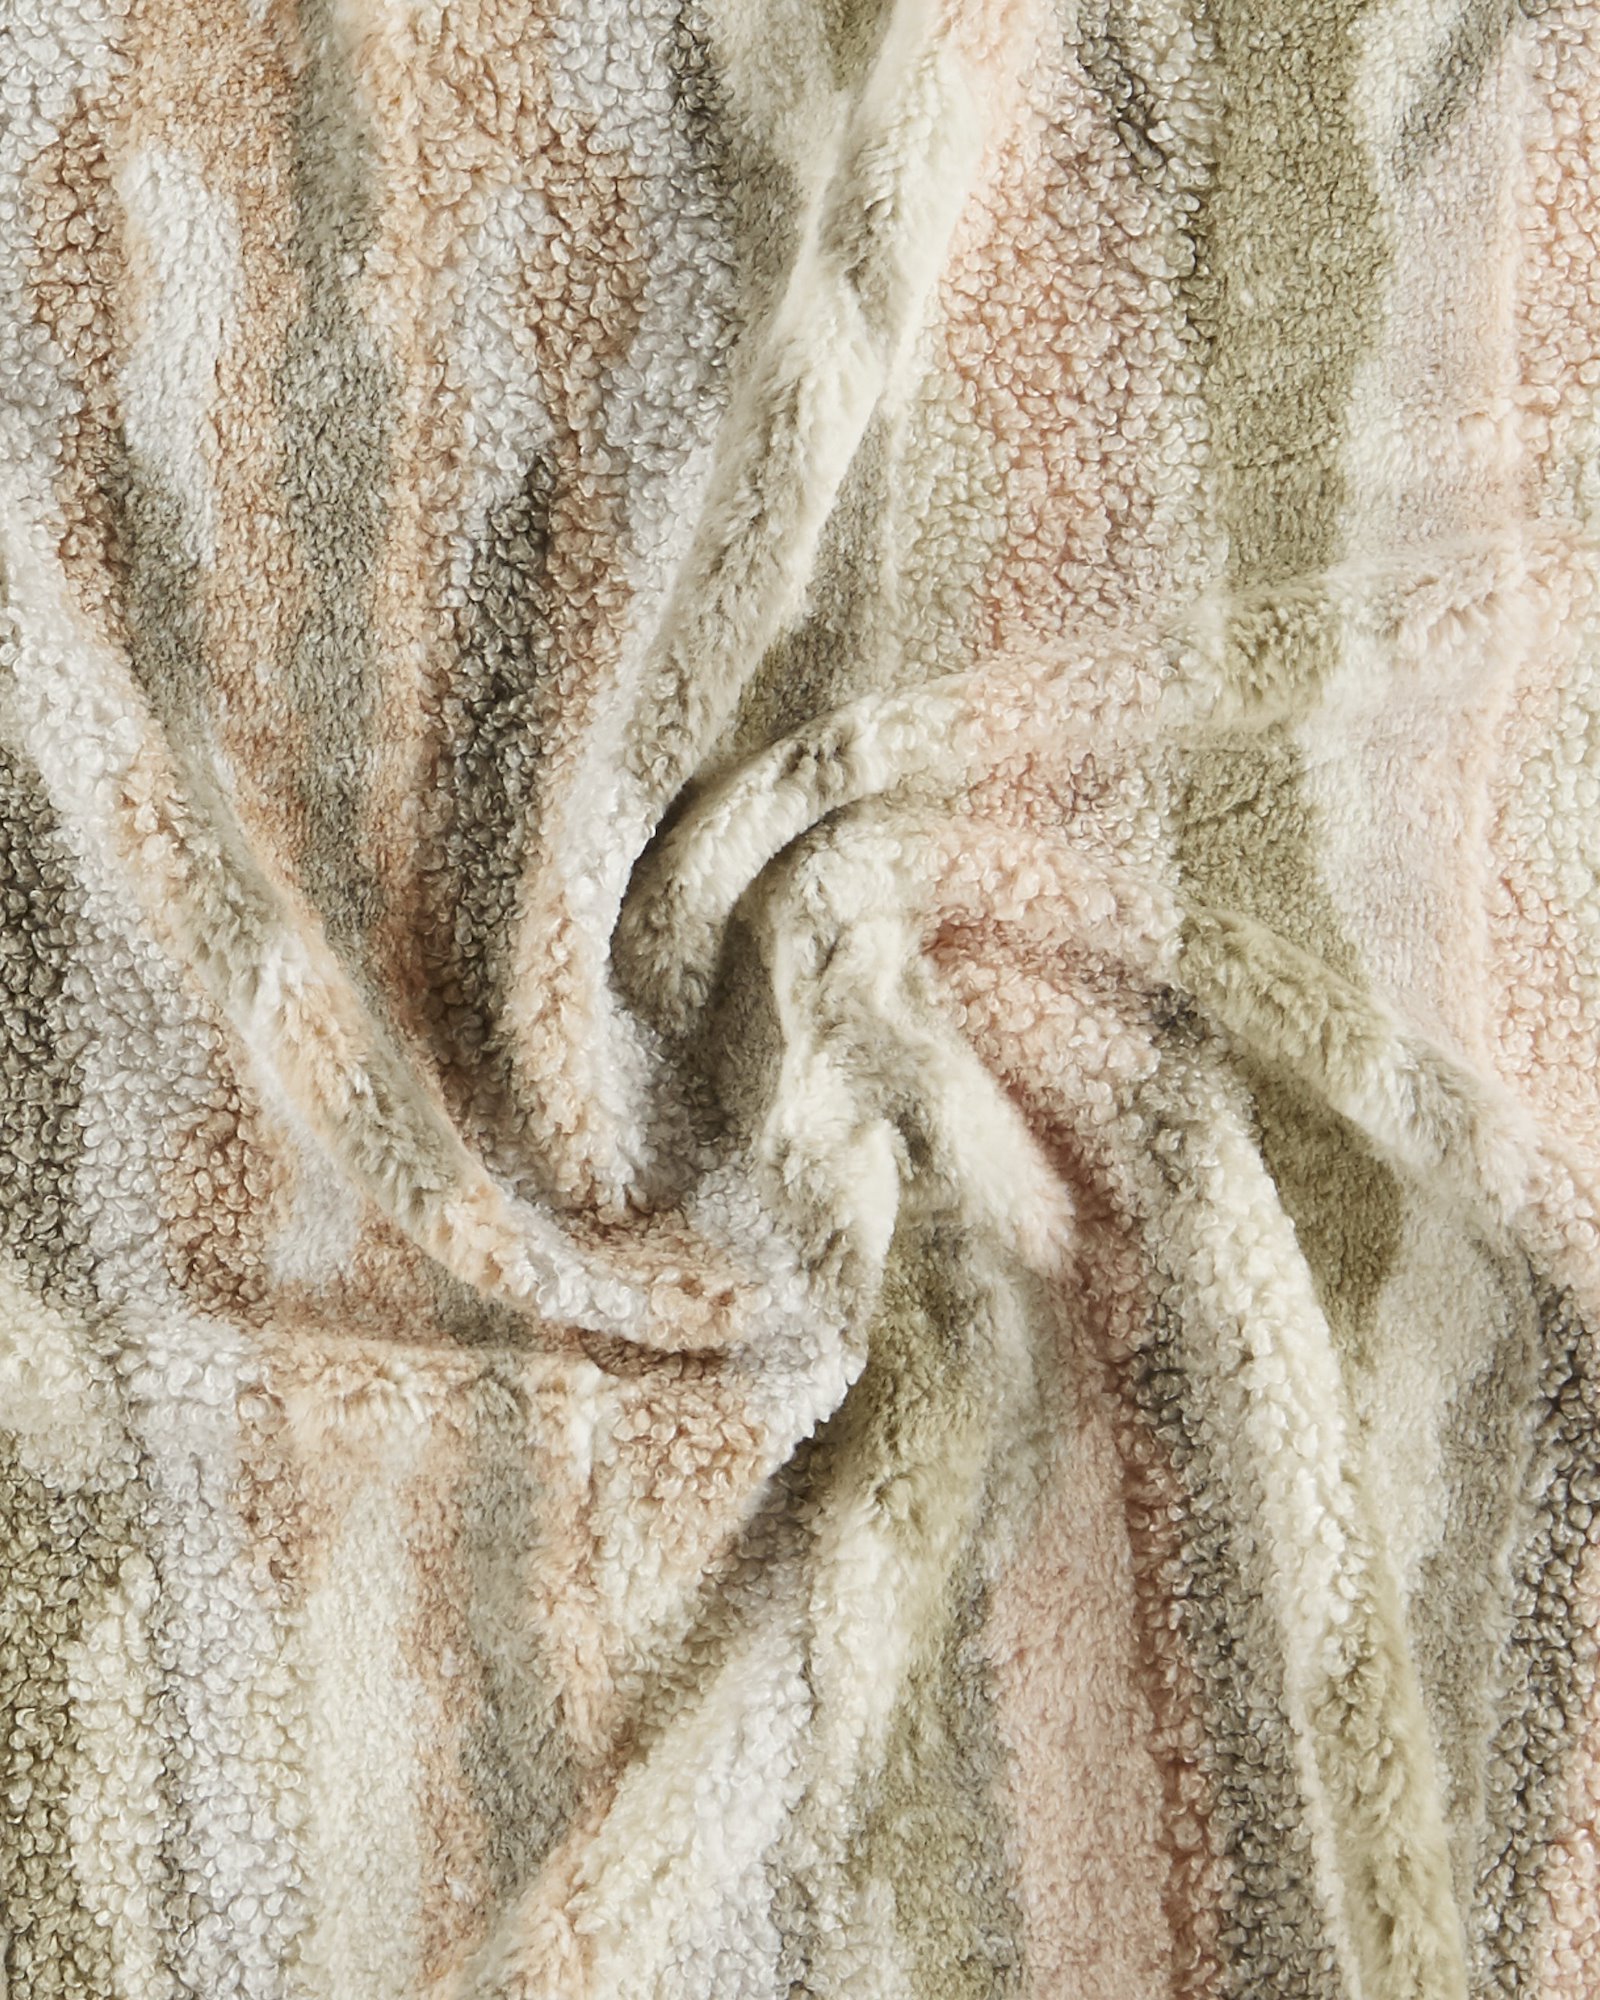 Brown Plush Fabric Close-up Stock Photo - Image of decoration